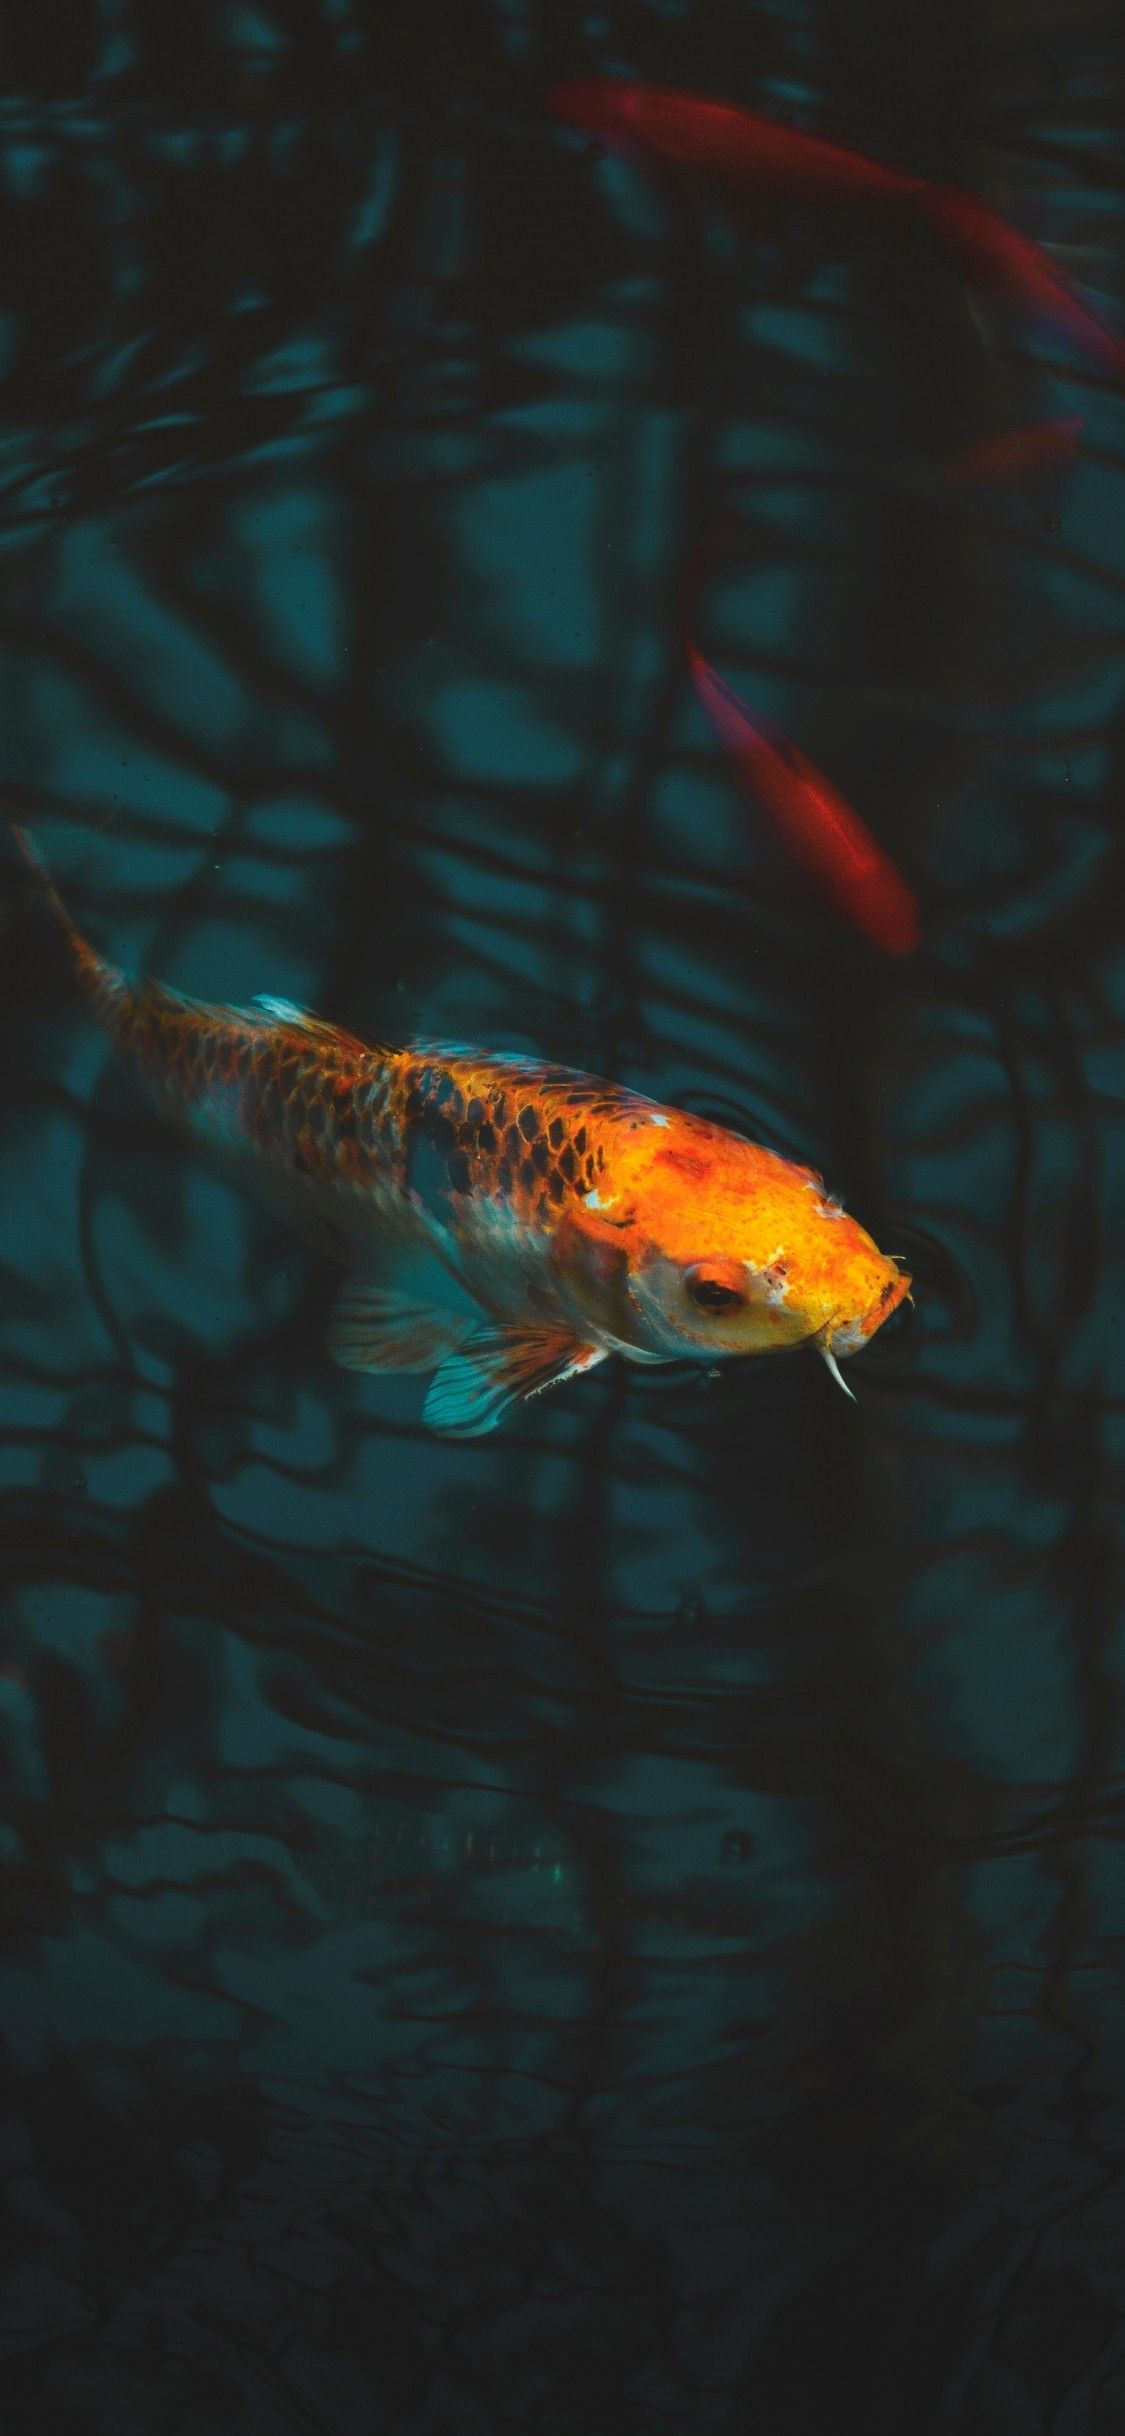 Aquarium Koi Carp Underwater Fish Wallpaper HD iPhone